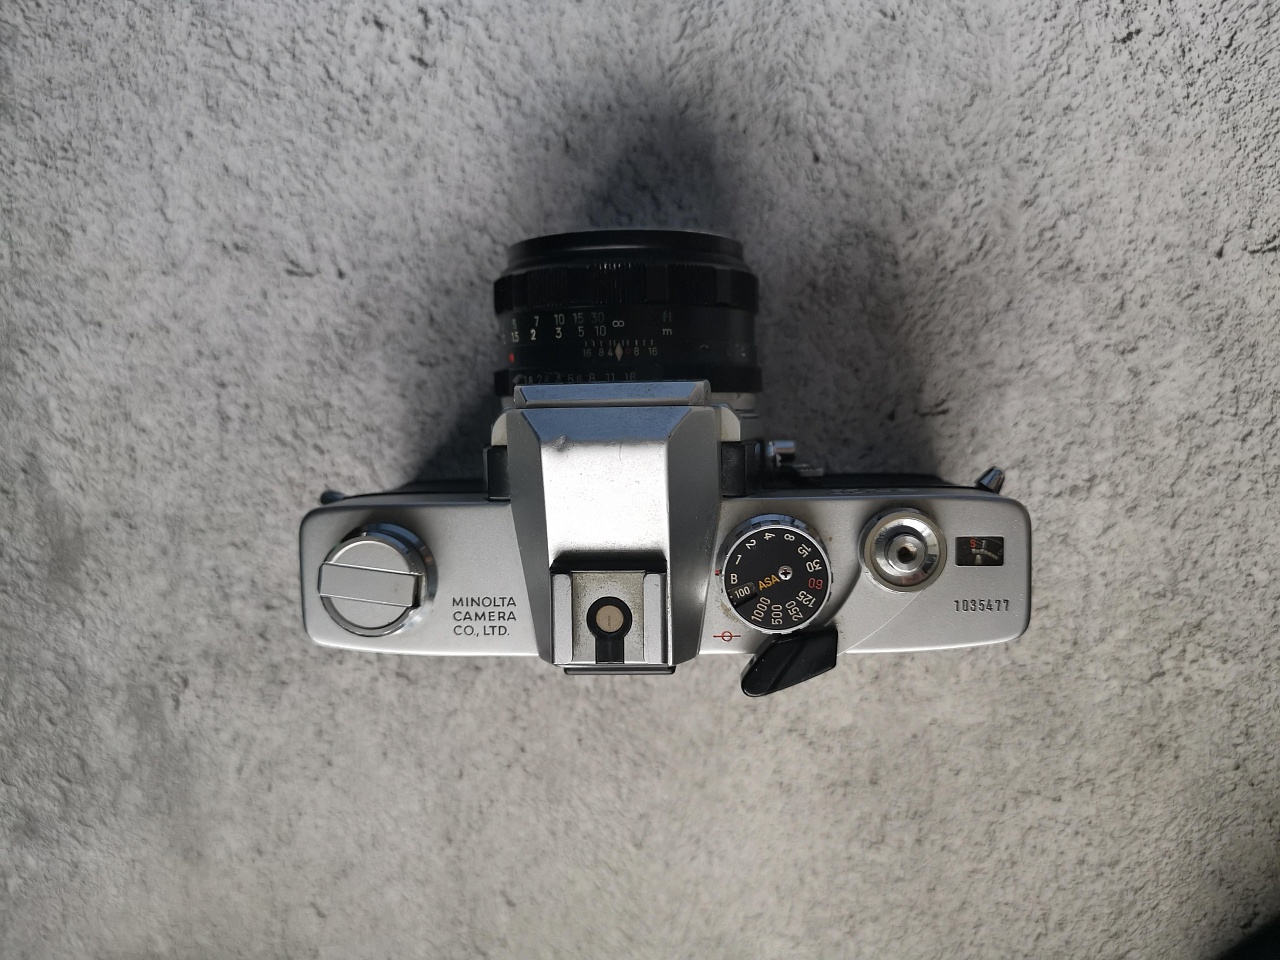 Minolta SRT super + Minolta mc rokkor-pf 55 mm f/1.8 фото №2